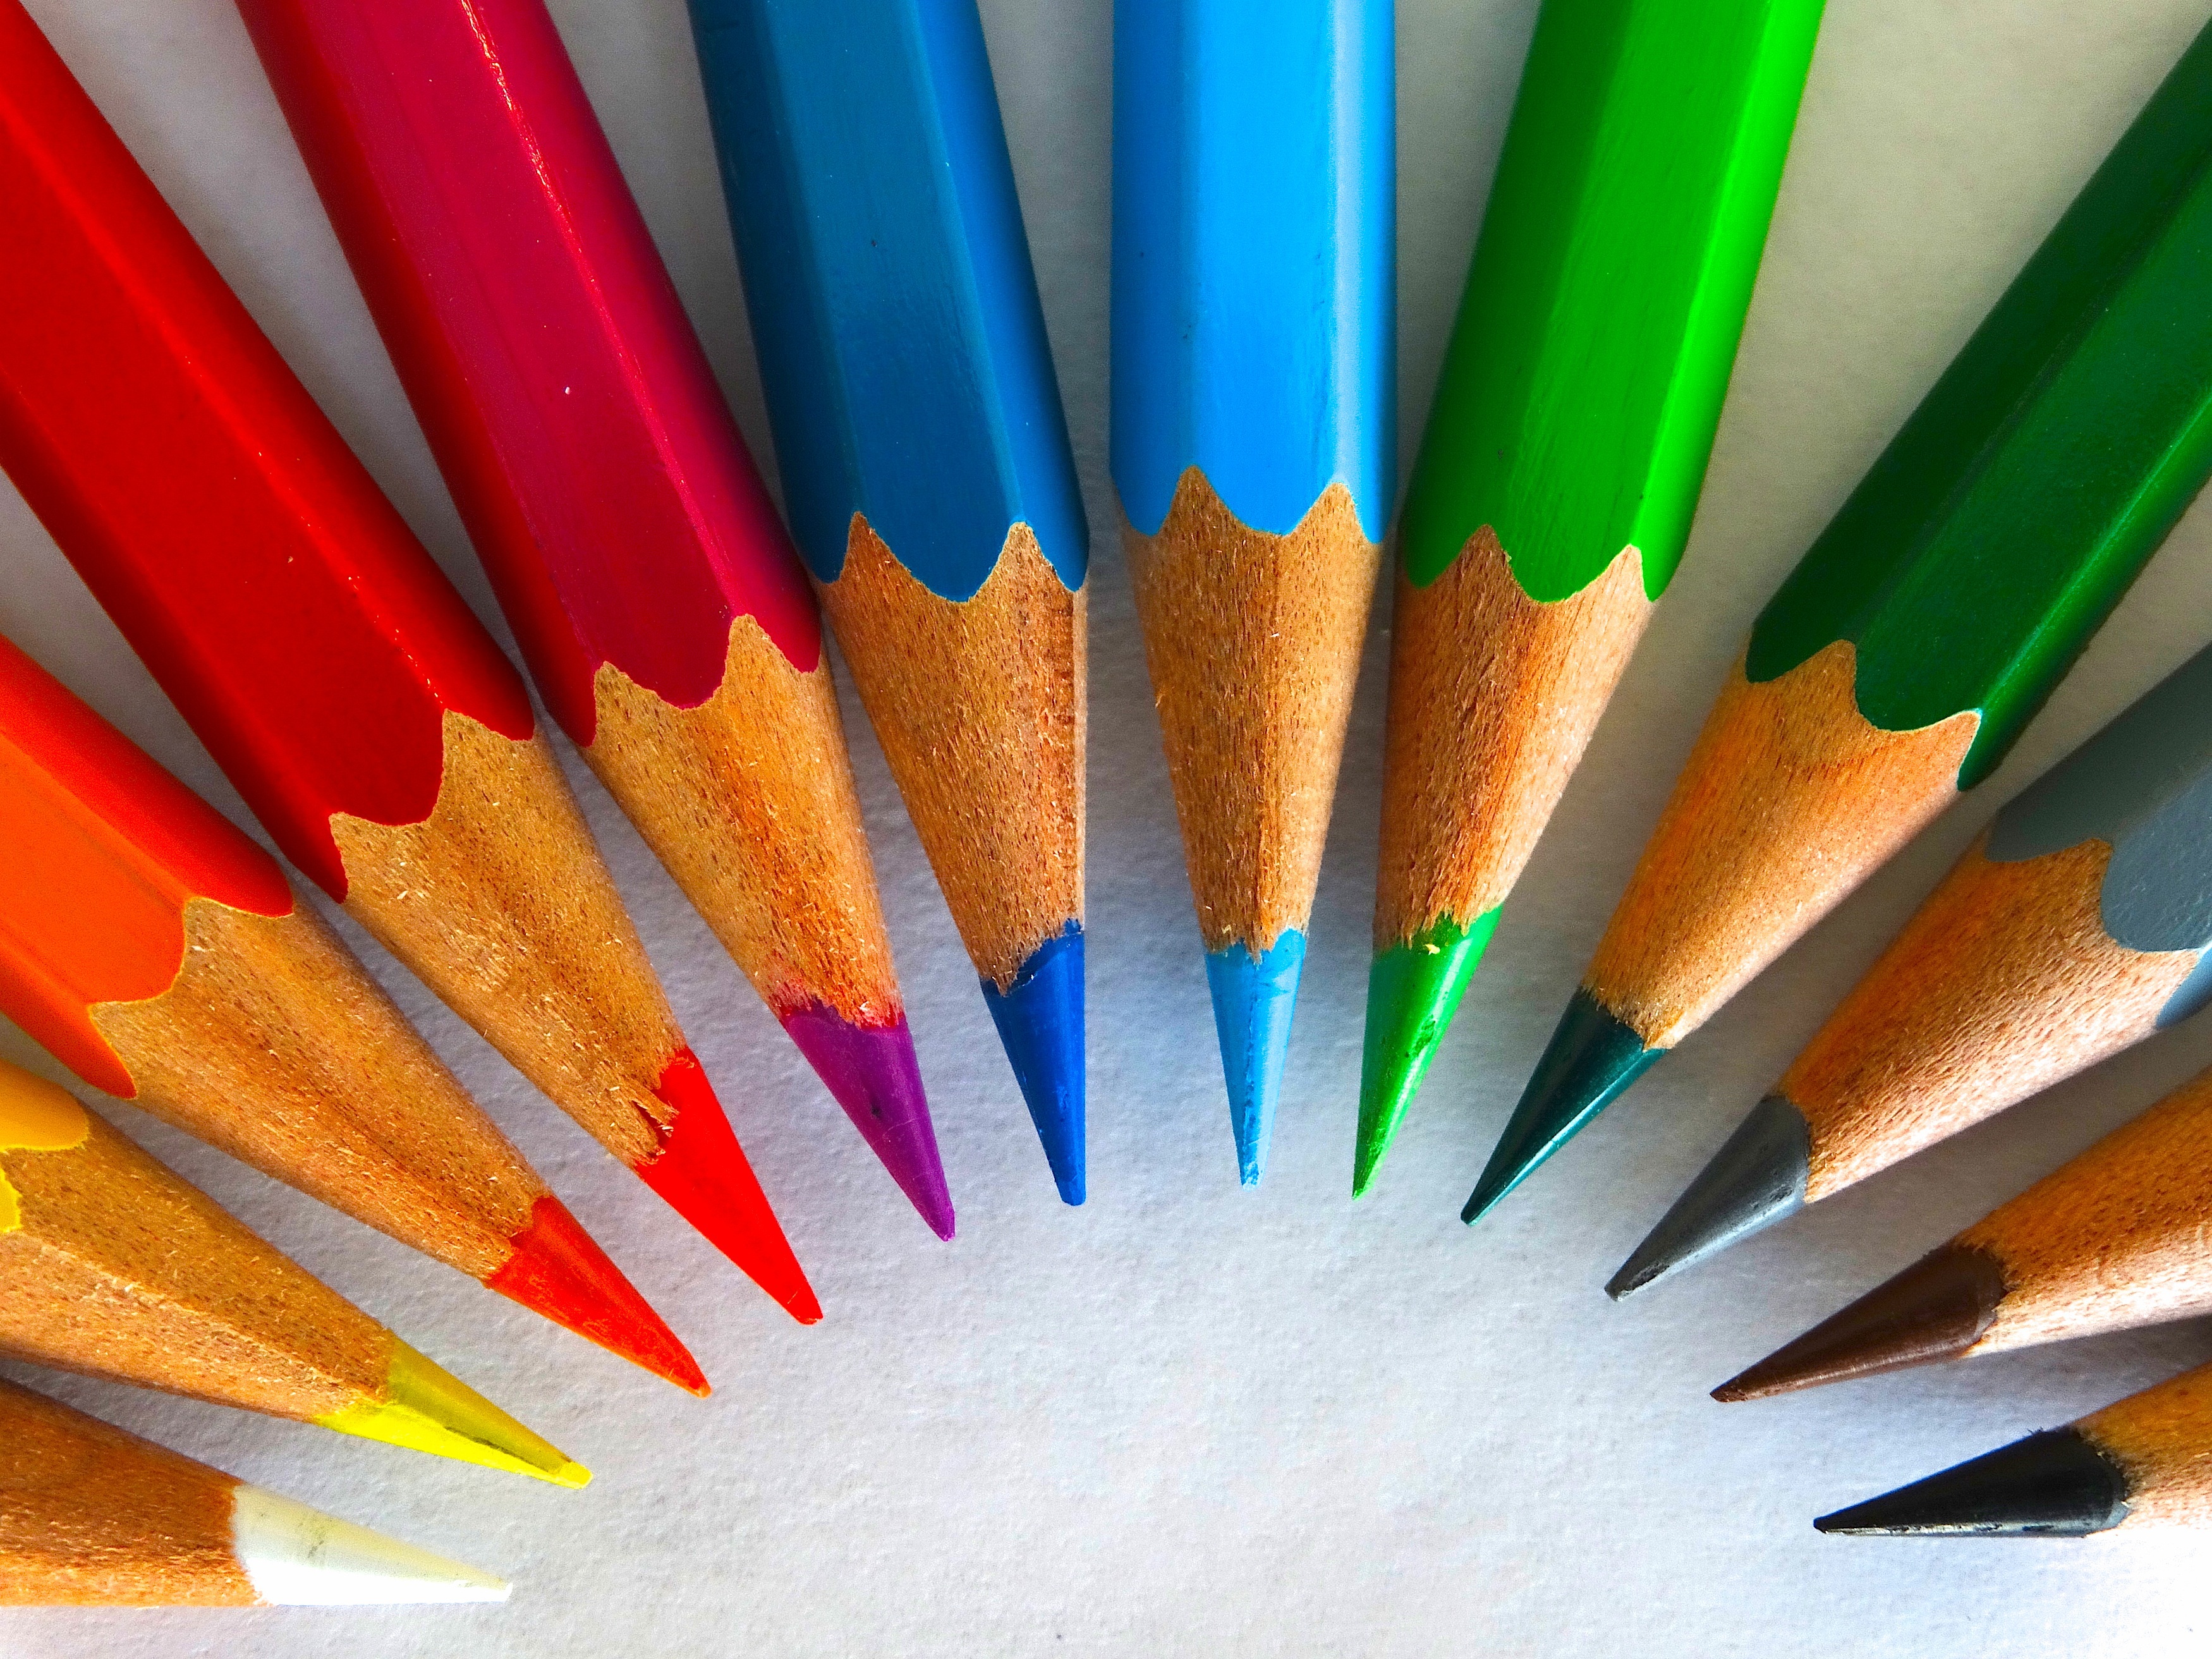 iridescent, rainbow, miscellanea, miscellaneous, colored pencils, spearhead, prick, colour pencils, imprisoned, sharpened